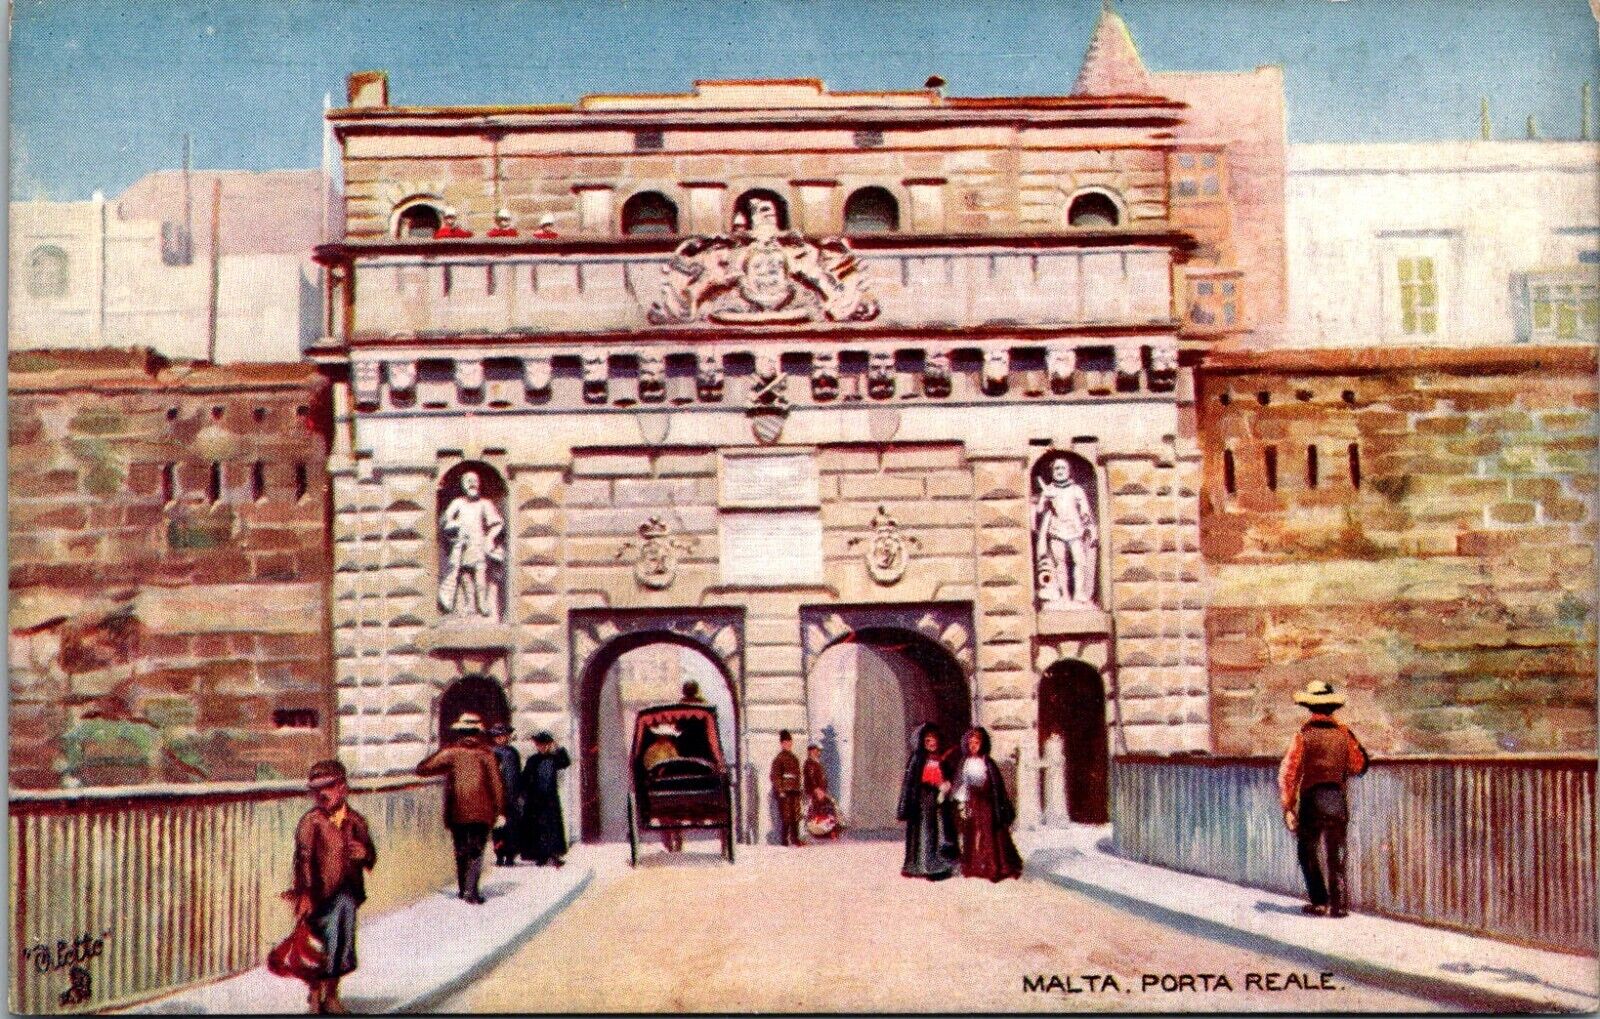 Postcard Raphael Tuck and Sons, Porta Reale, Malta, Entrance to Valetta